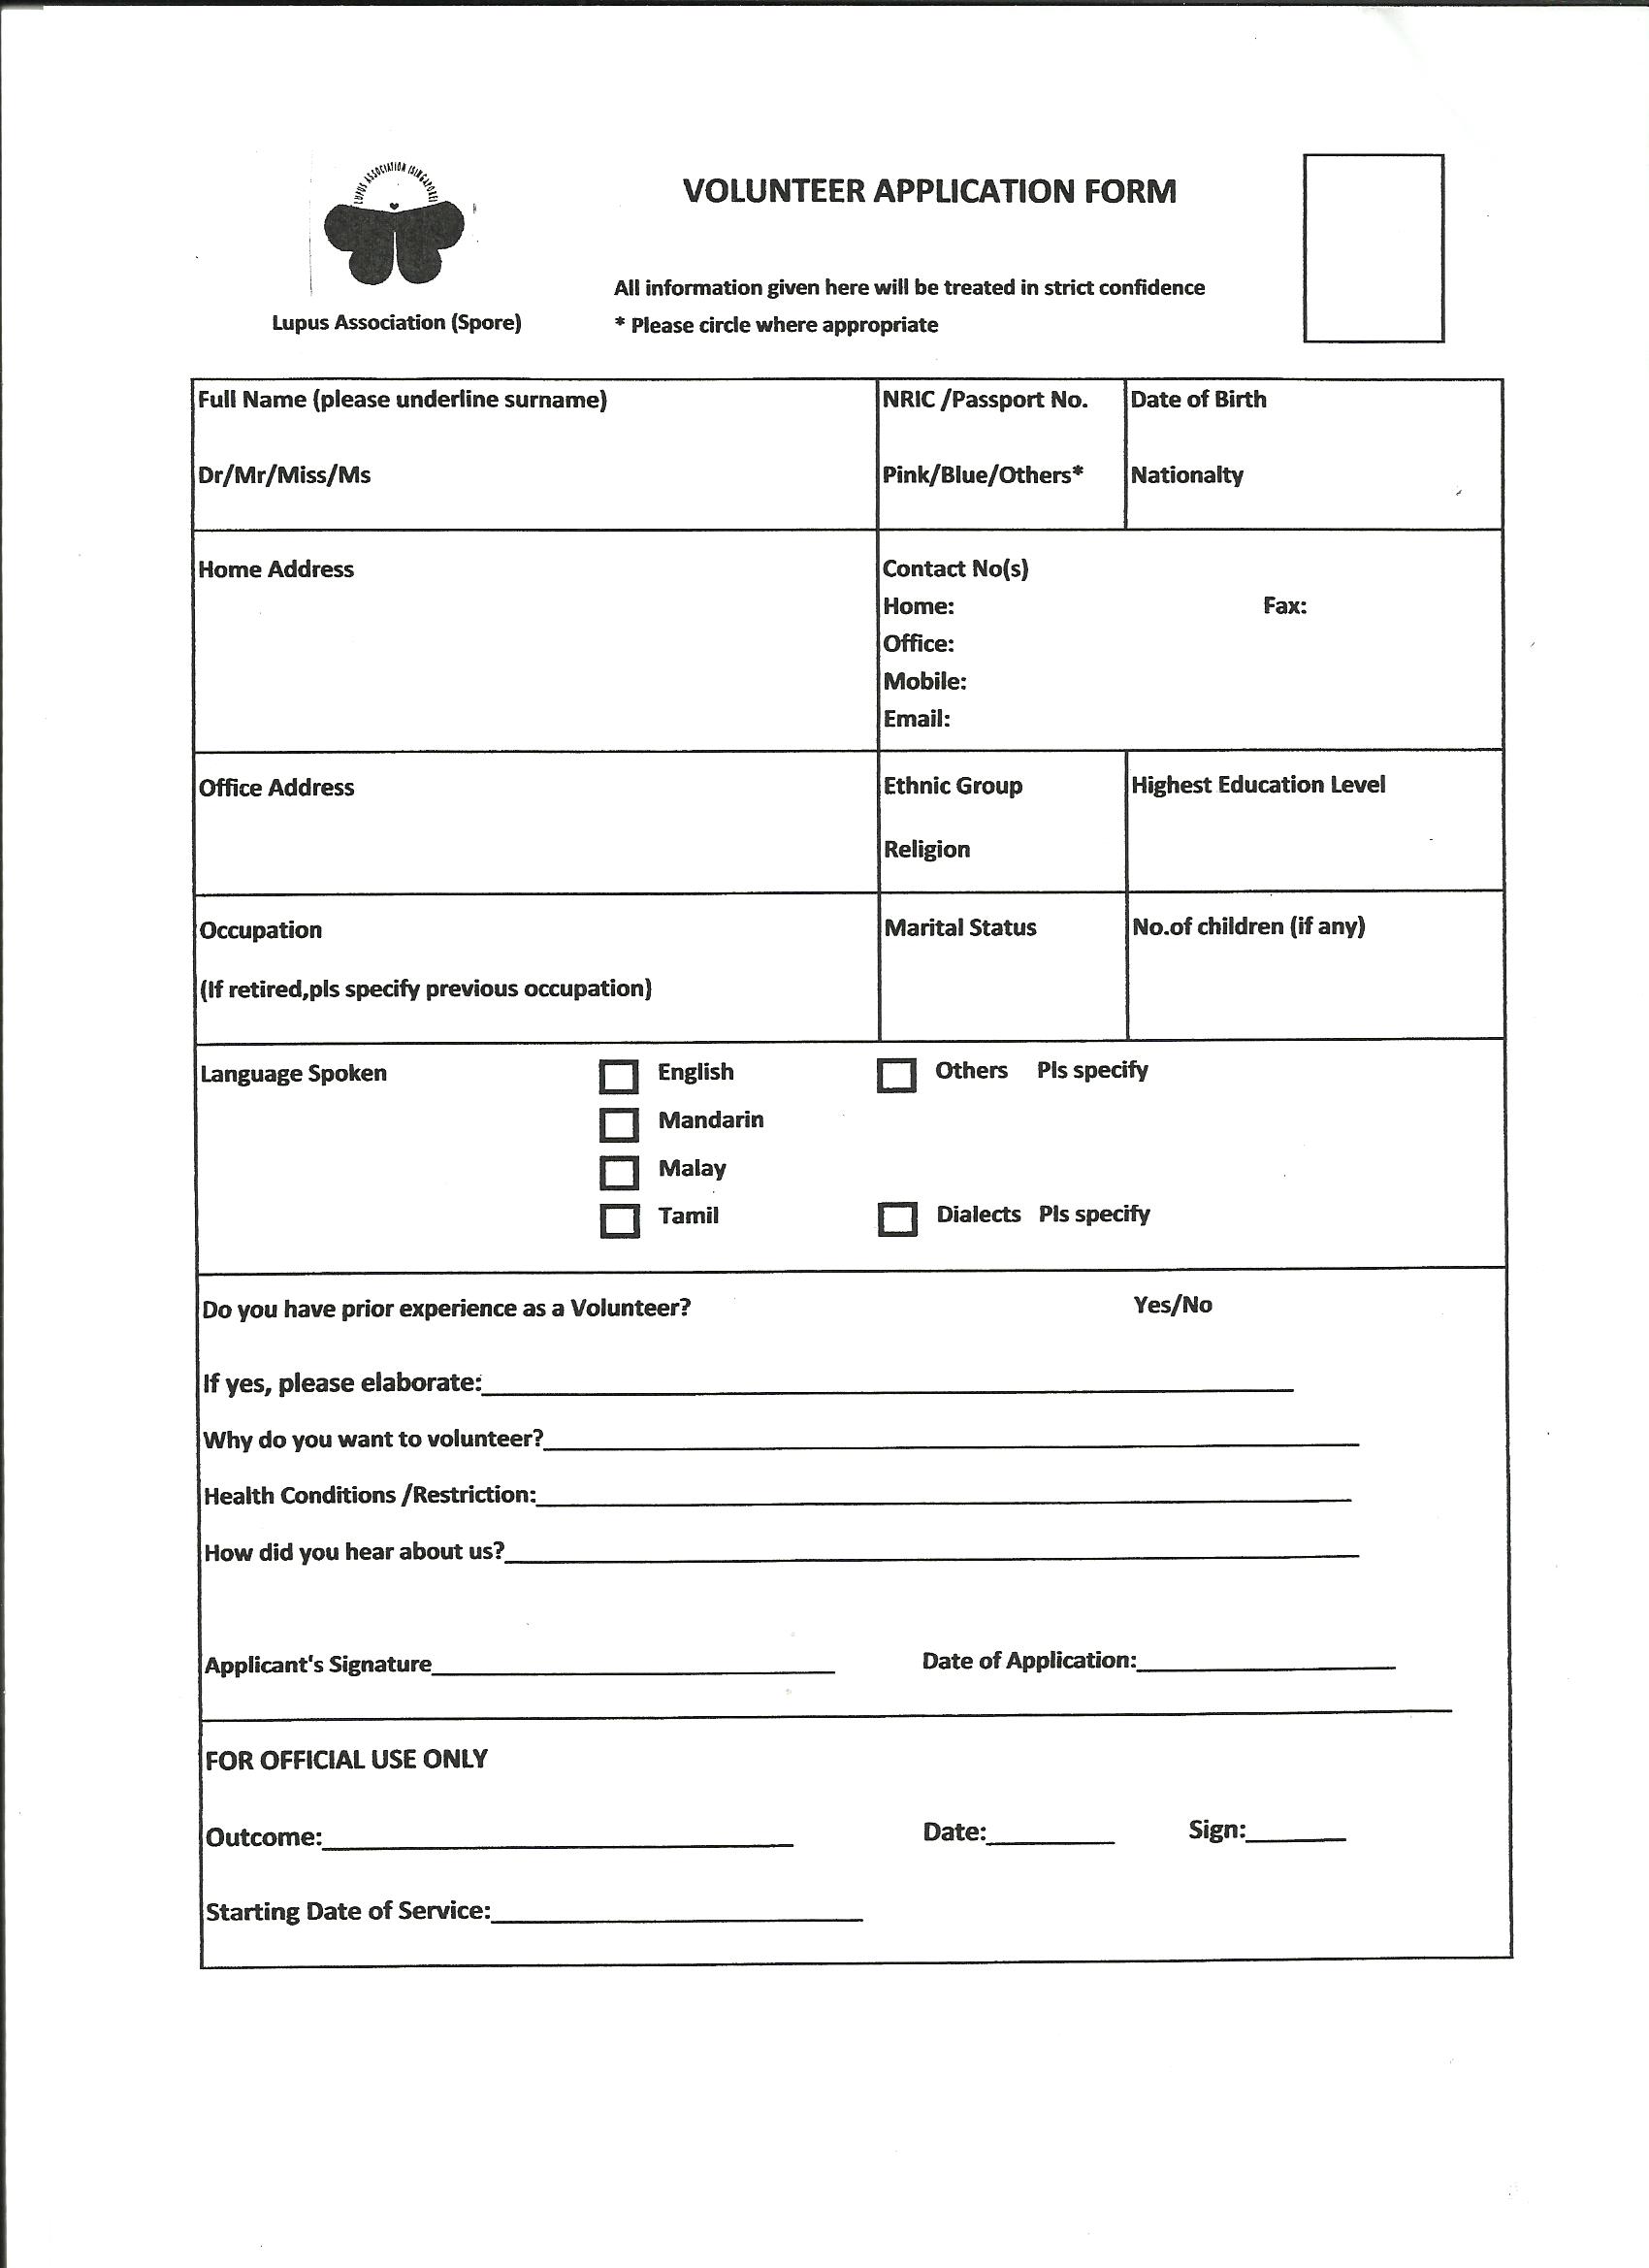 LAS Vol Application Form